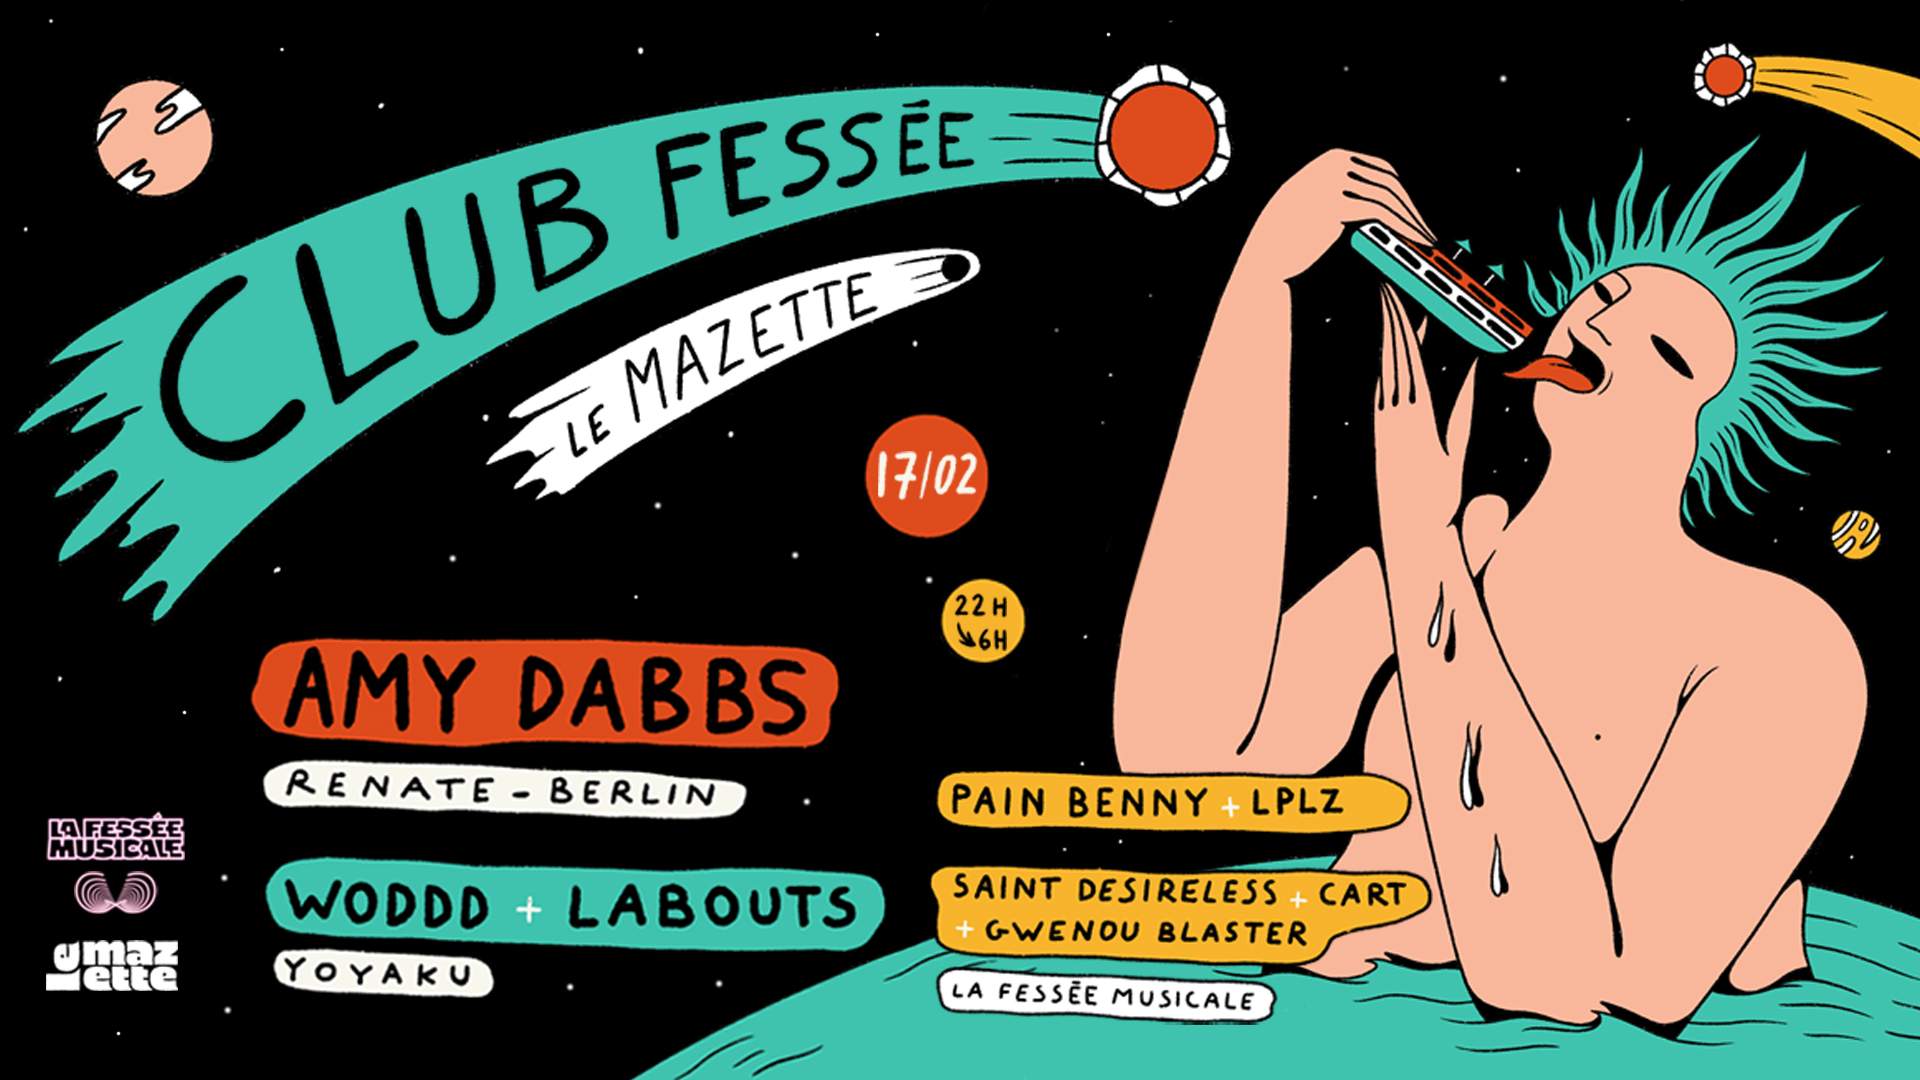 CLUB FESSÉE • Amy Dabbs (Renate - Berlin), Woddd + Labouts (Yoyaku) - フライヤー表